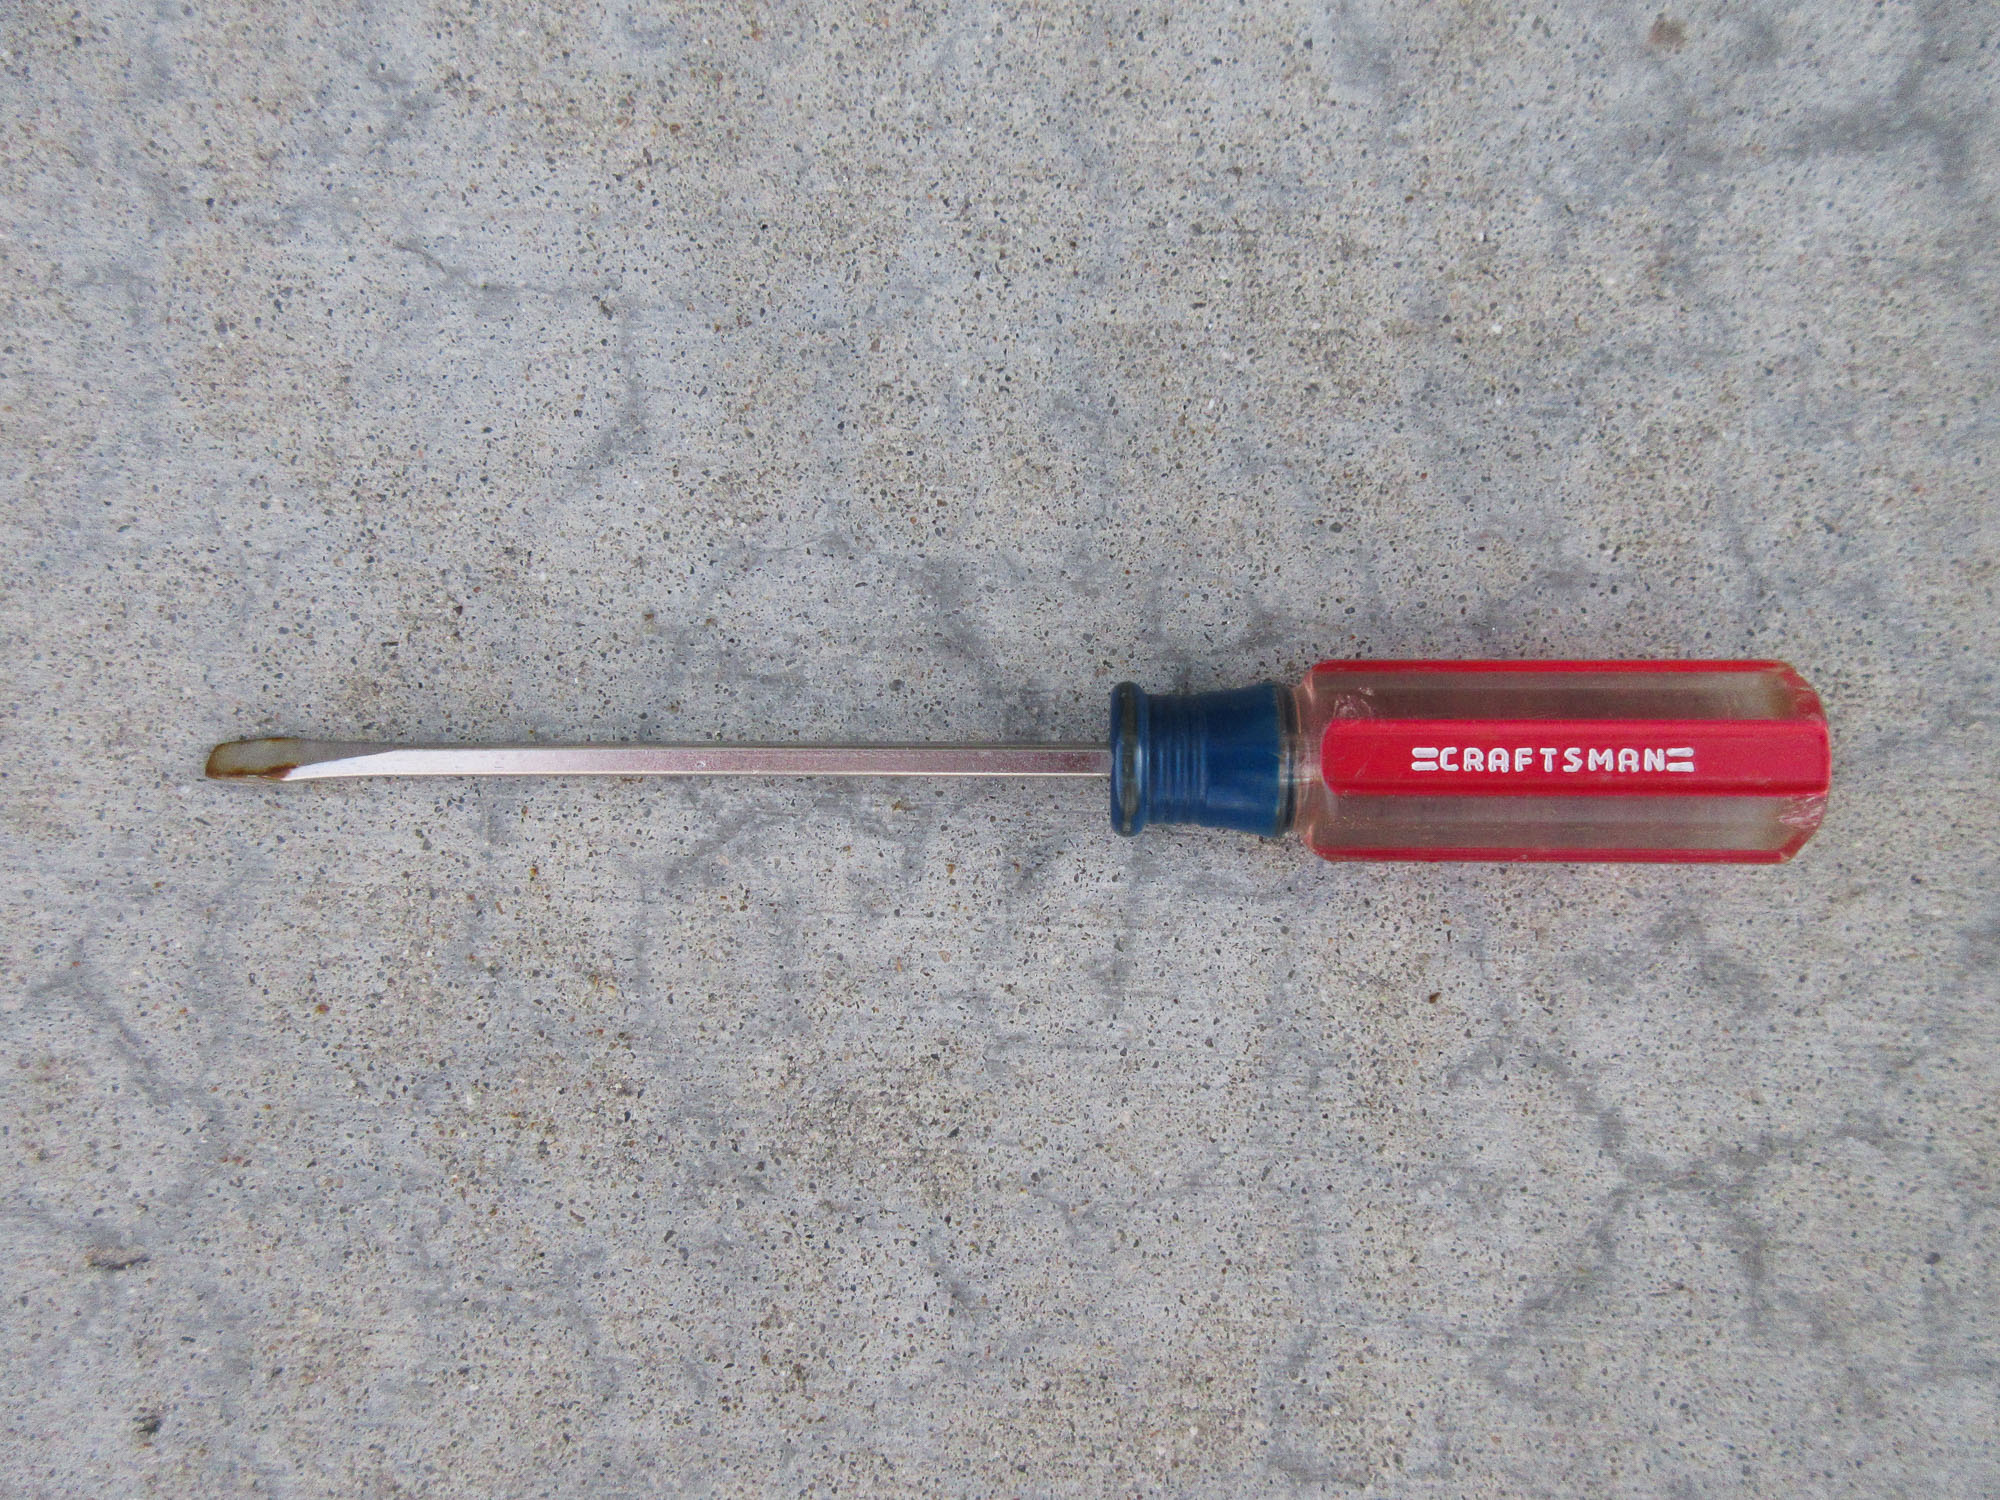 Craftsman flat head screwdriver